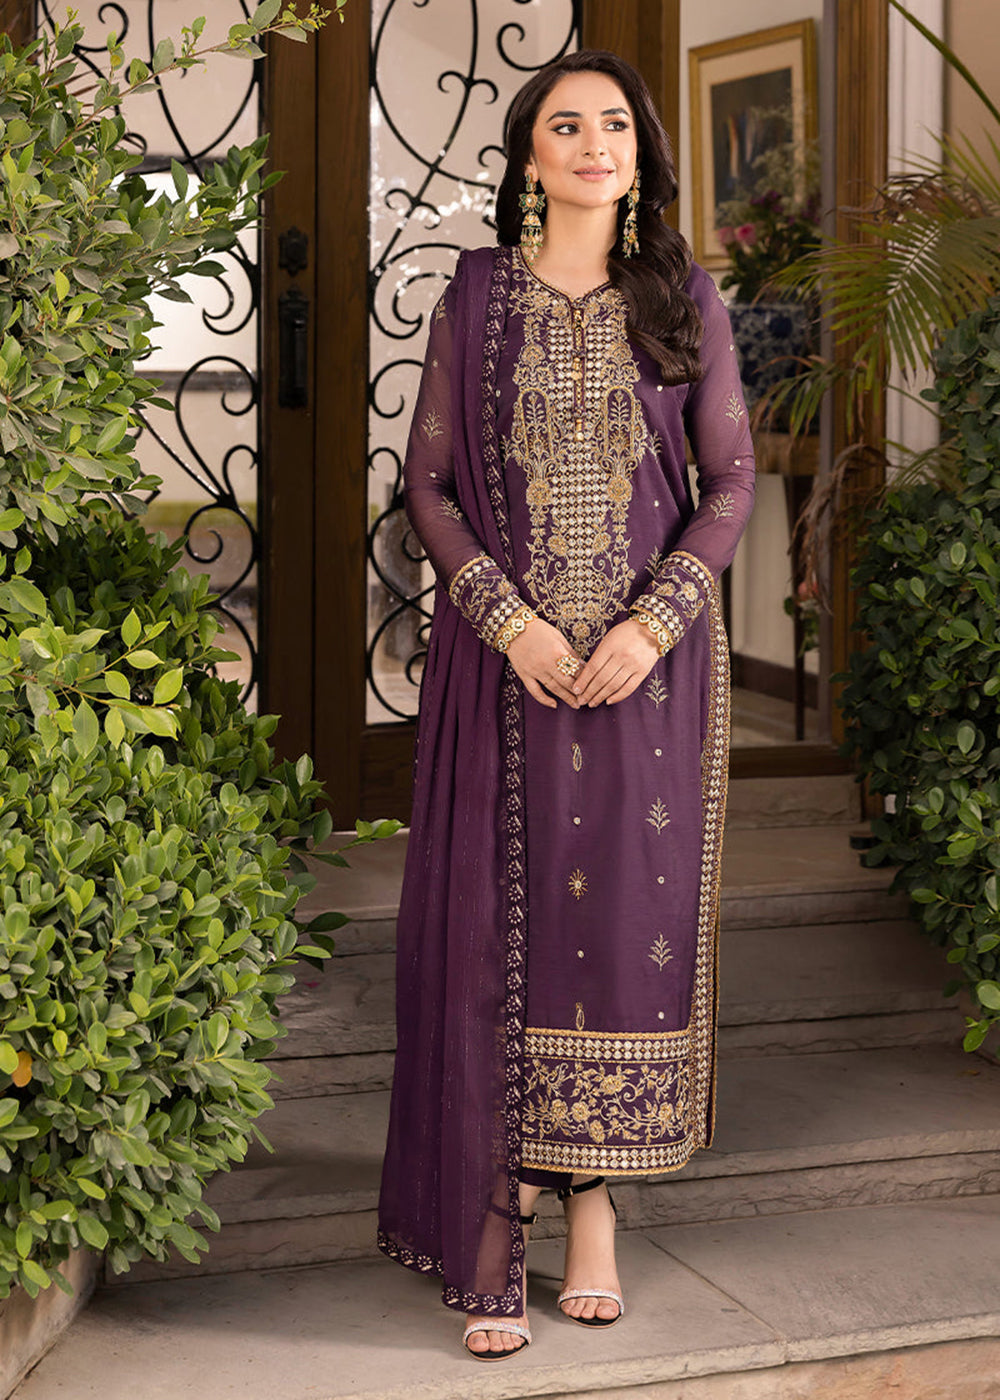 Buy Now Mauve Purple Suit - Maahru, Noorie & Meerub '23 by Asim Jofa - AJSM-44 Online in USA, UK, Canada & Worldwide at Empress Clothing.